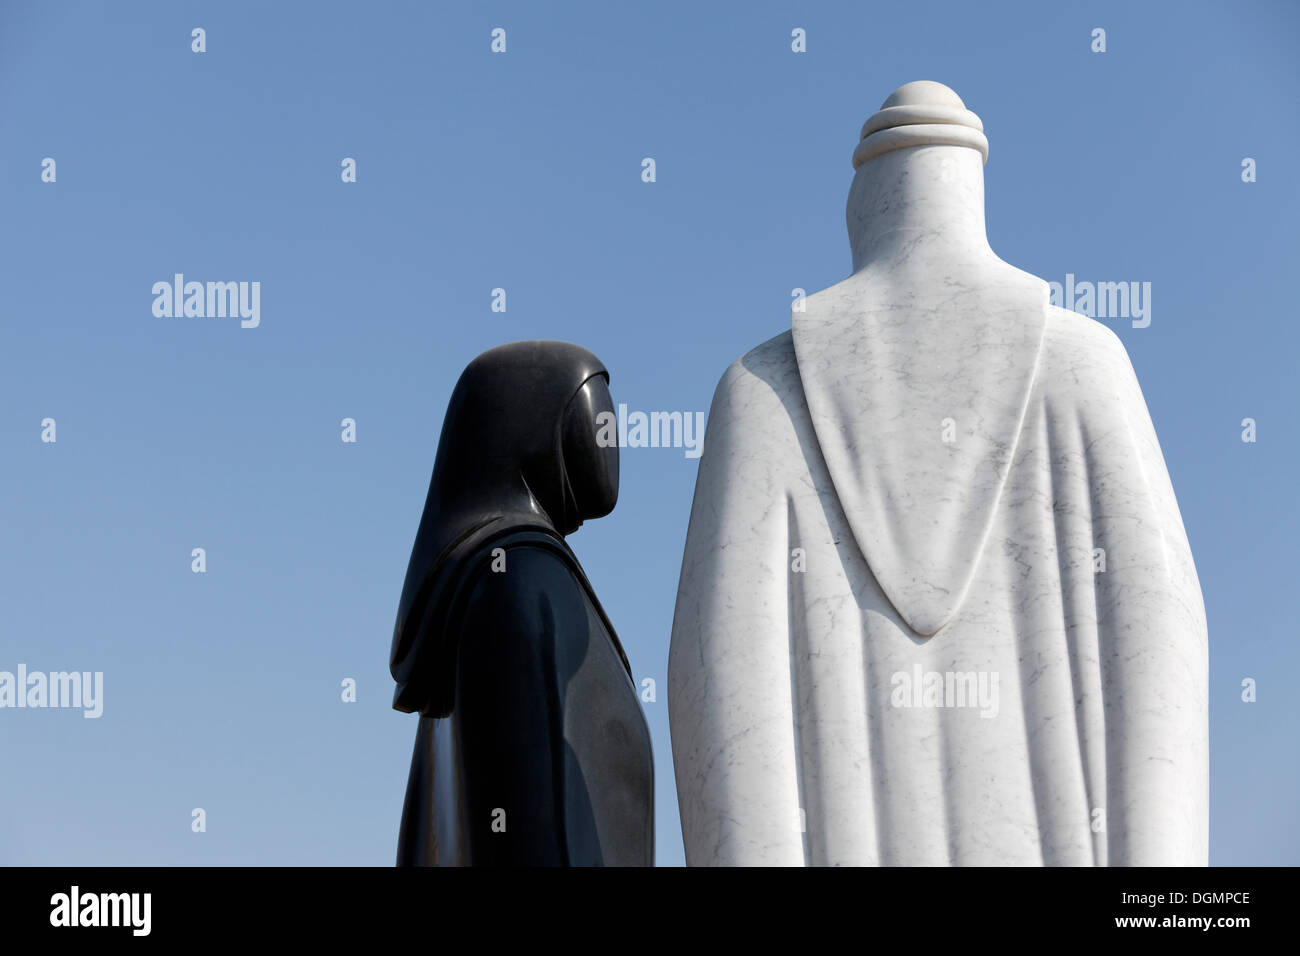 Sculpture of an Arab man and an Arab woman, Dubai, United Arab Emirates, Middle East, Asia Stock Photo